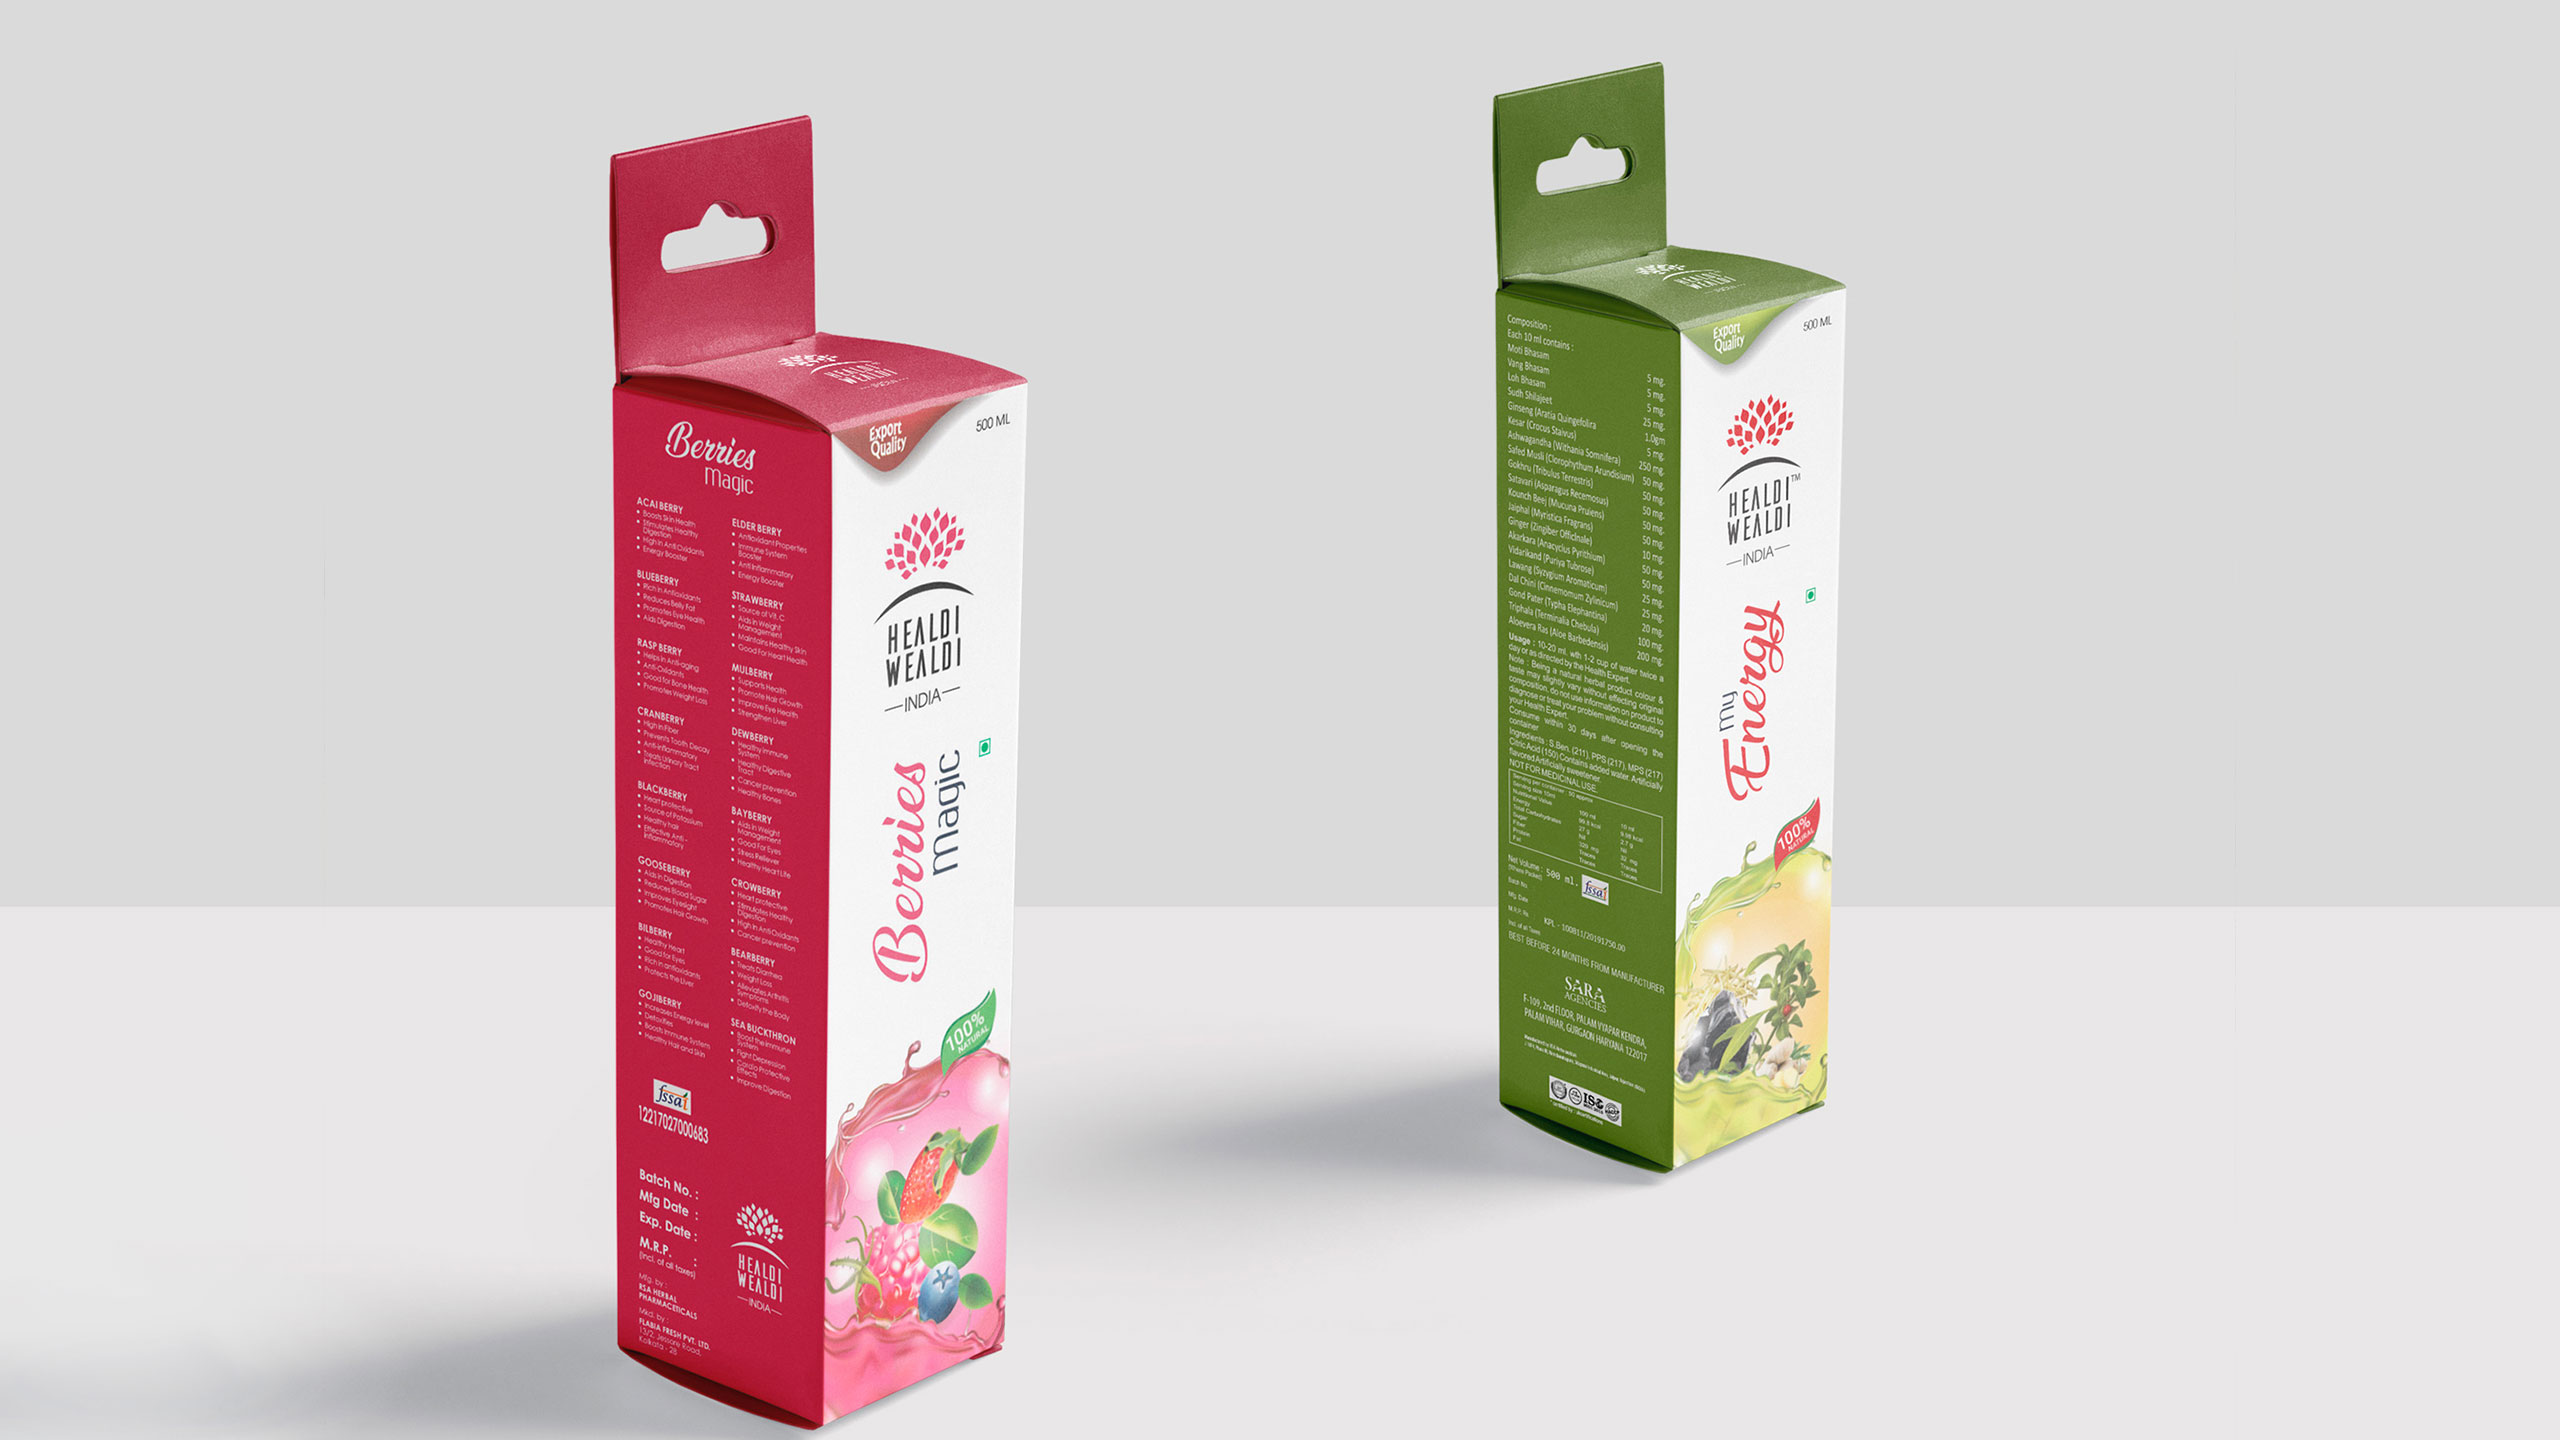 Healdi wealdi packaging design